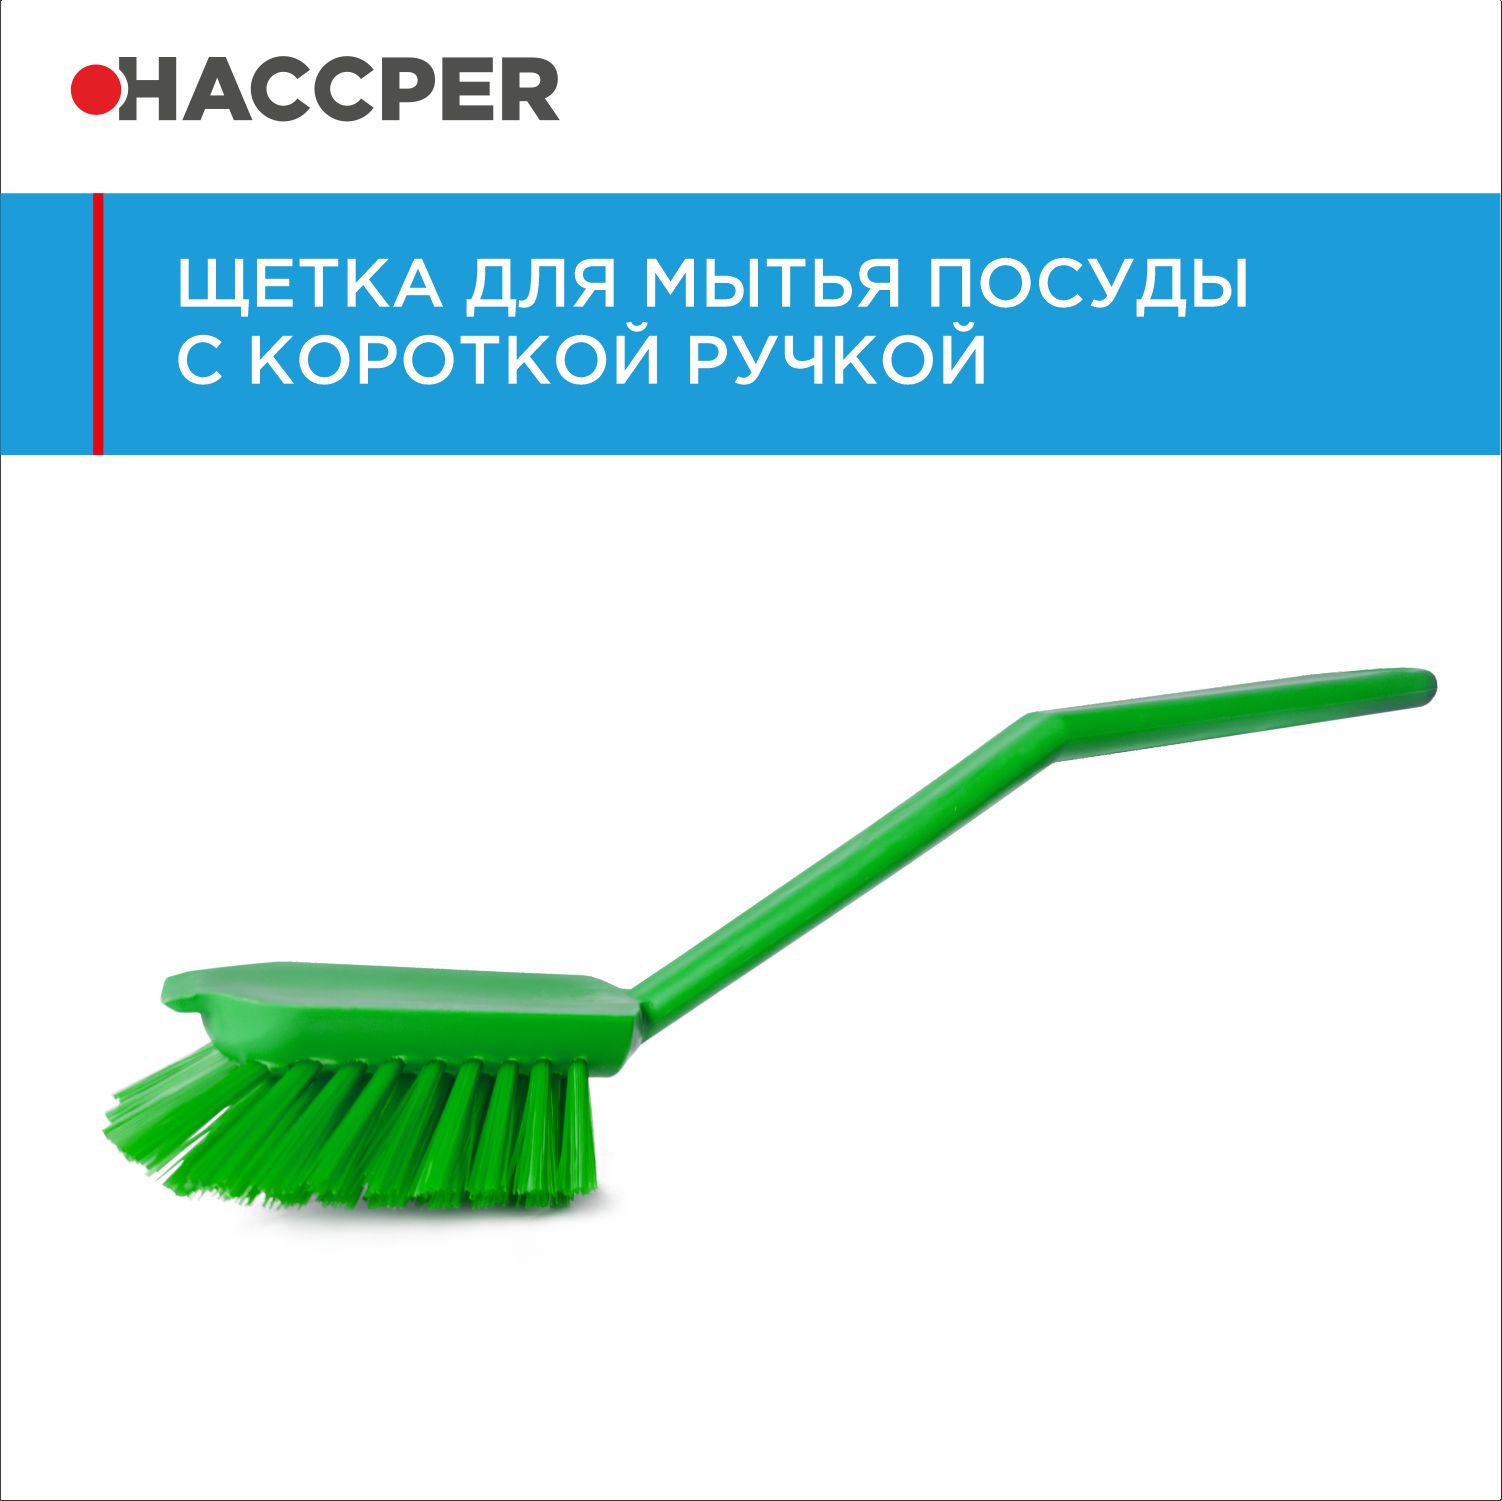 Щетка HACCPER с короткой ручкой для мытья посуды, зеленая